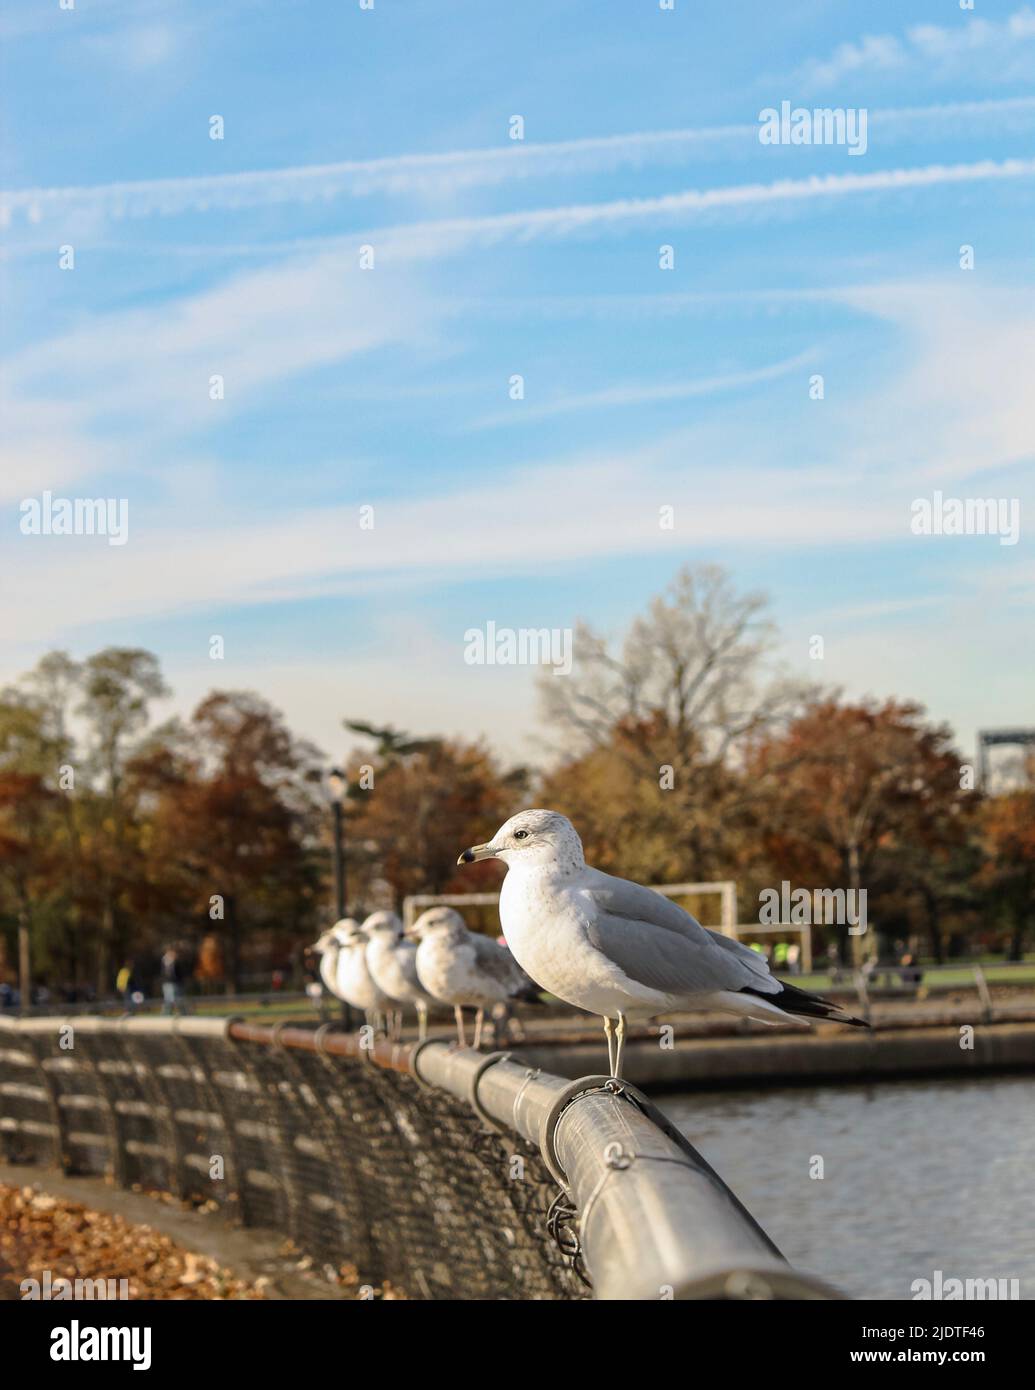 Seagulls At Park Stock Photo